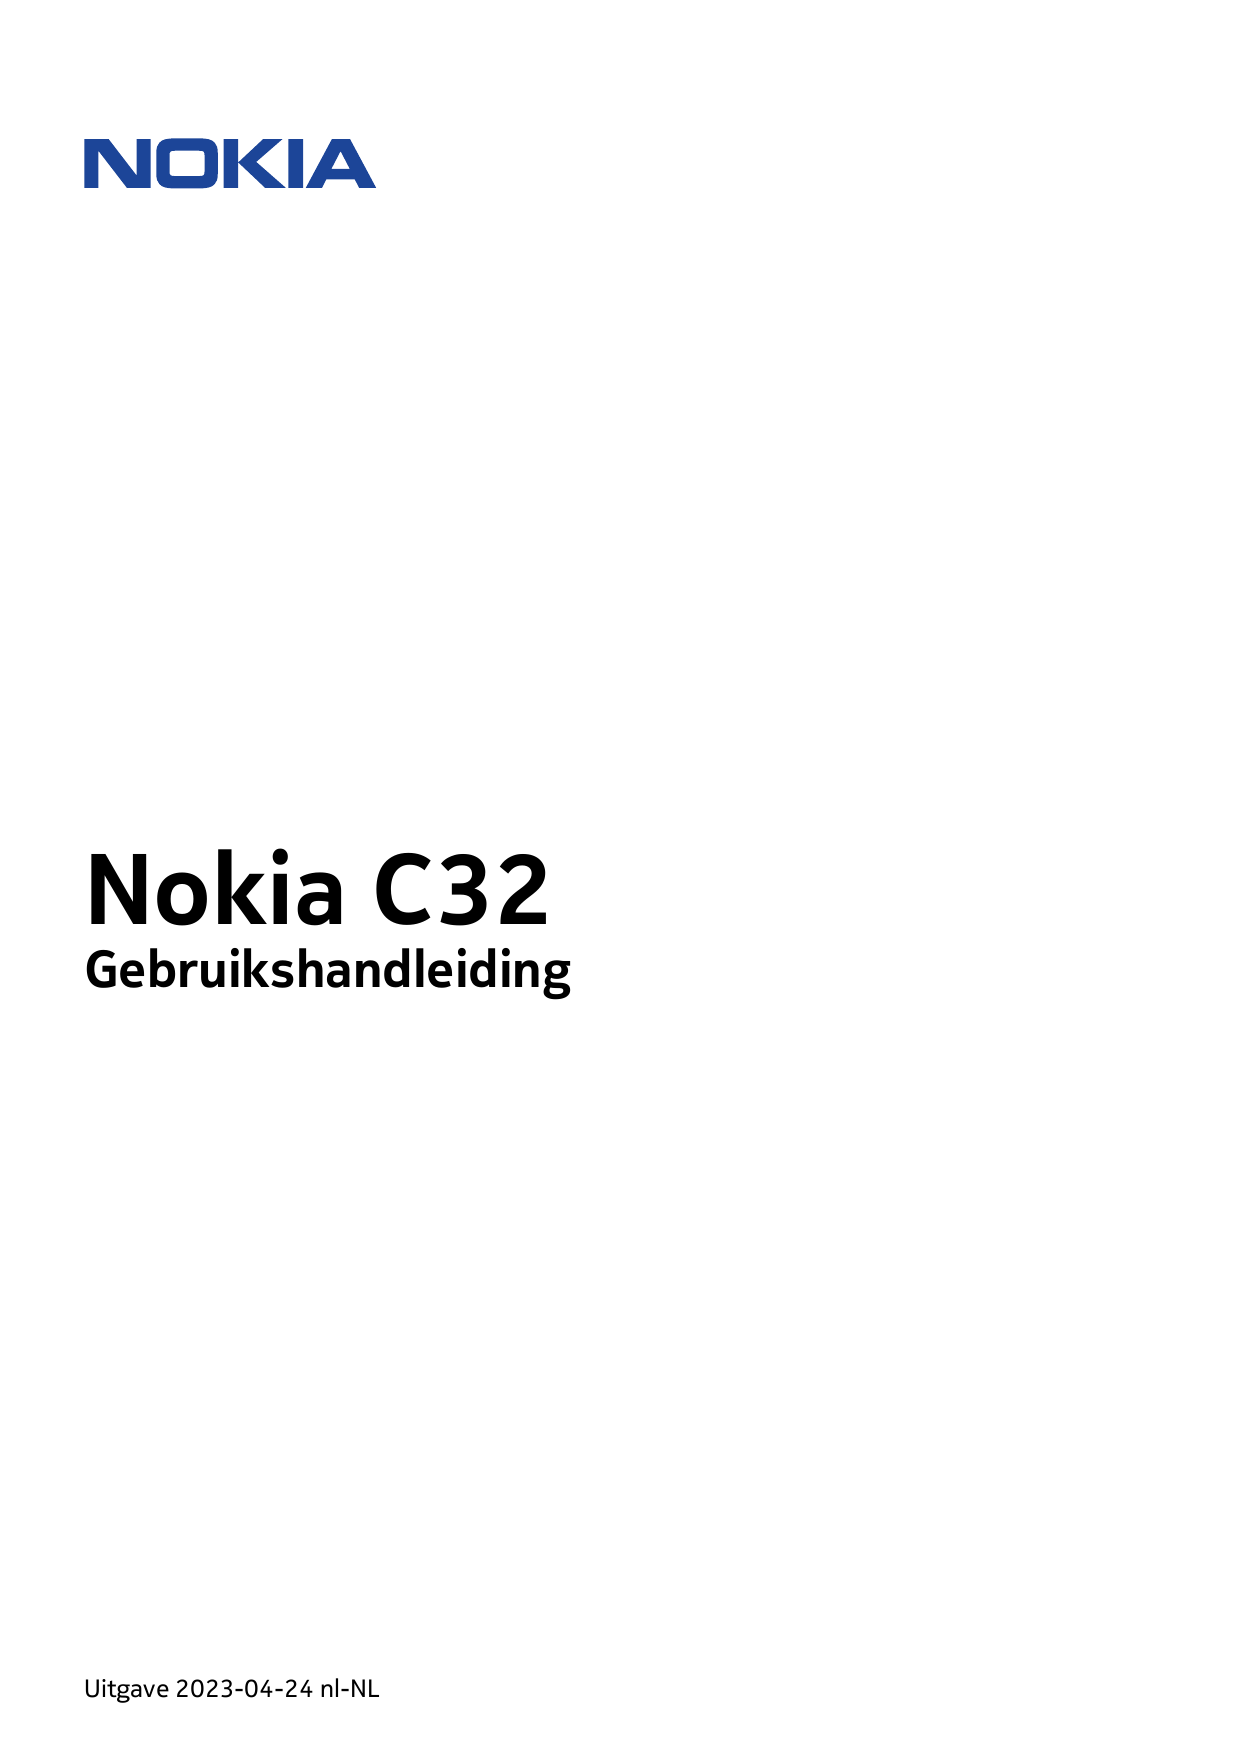 Nokia C32GebruikshandleidingUitgave 2023-04-24 nl-NL